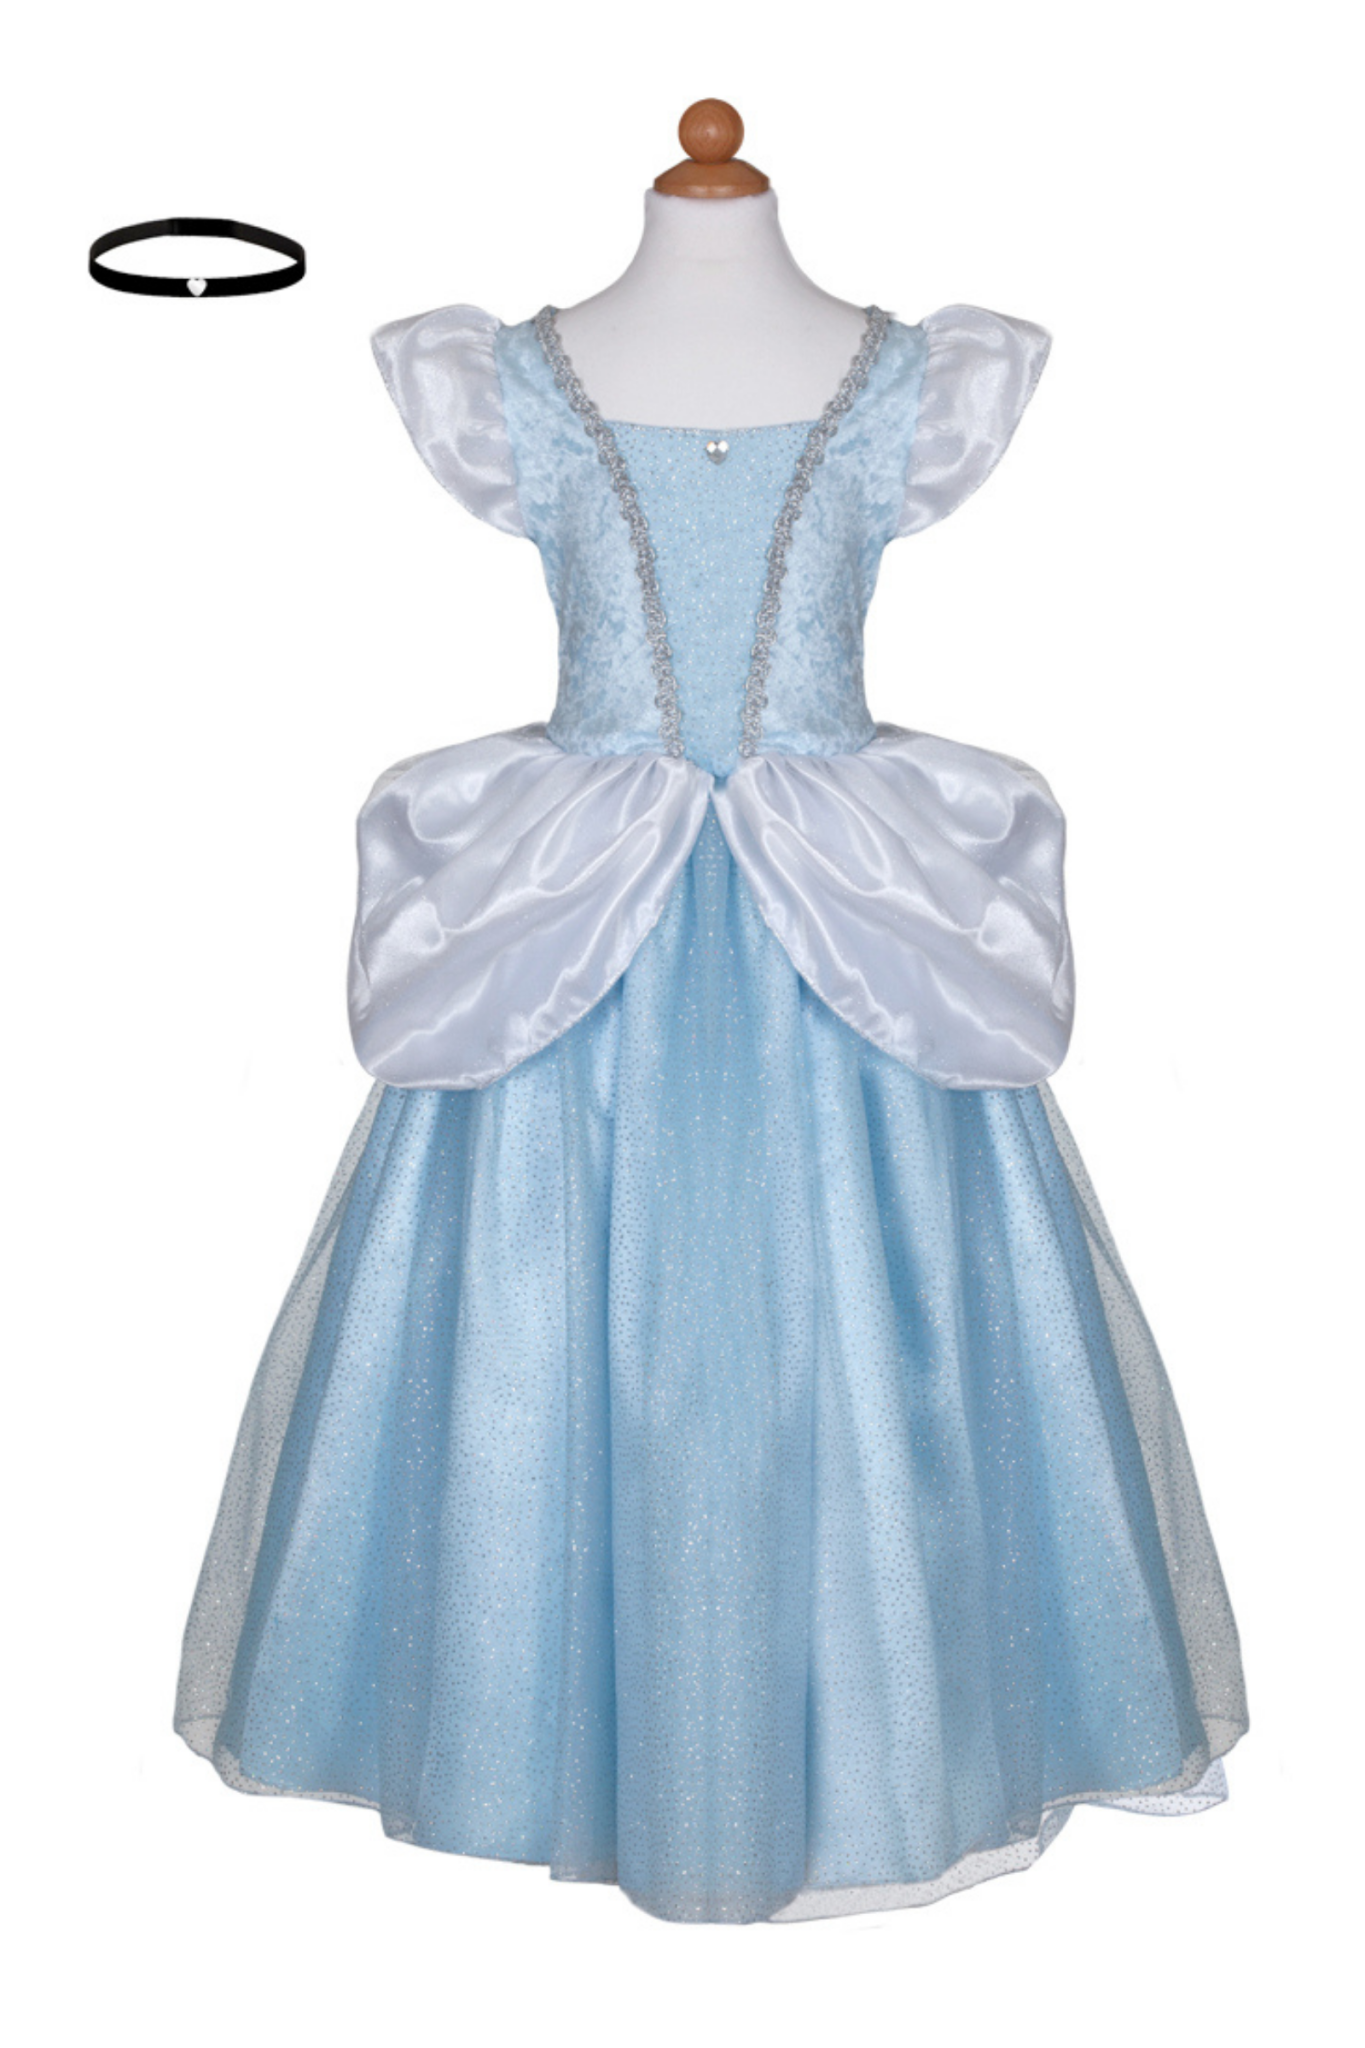 Deluxe Cinderella Dress - Tools 4 Teaching